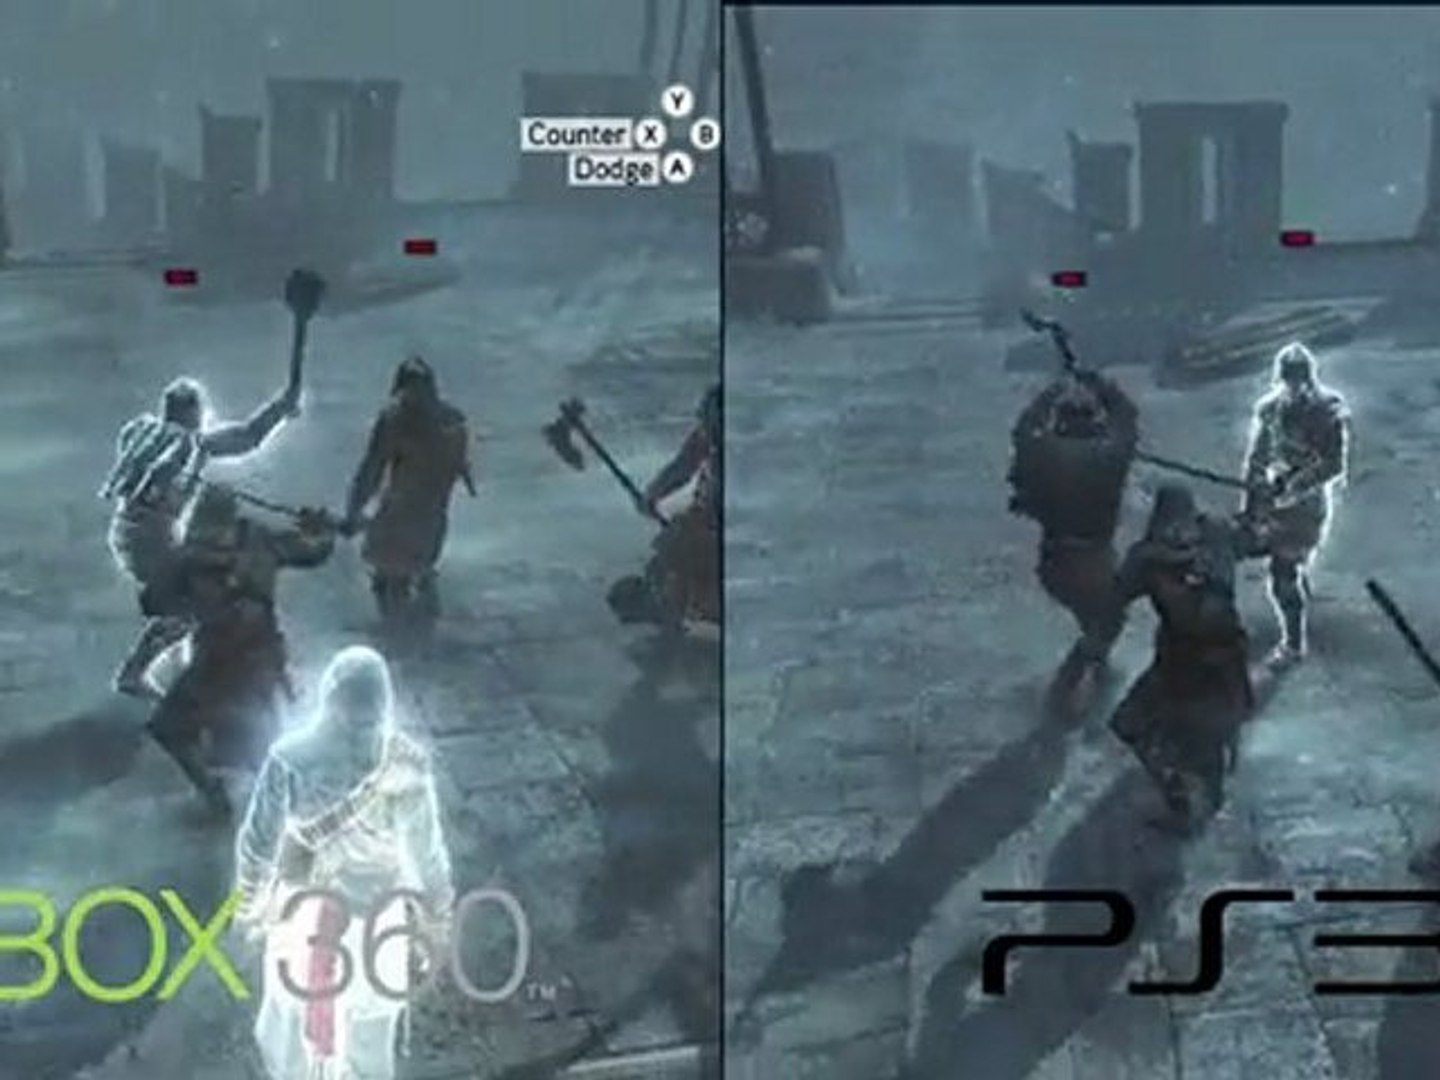 Assassin's Creed 1 (2007) PS3 vs XBOX 360 vs PC (Graphics, FPS